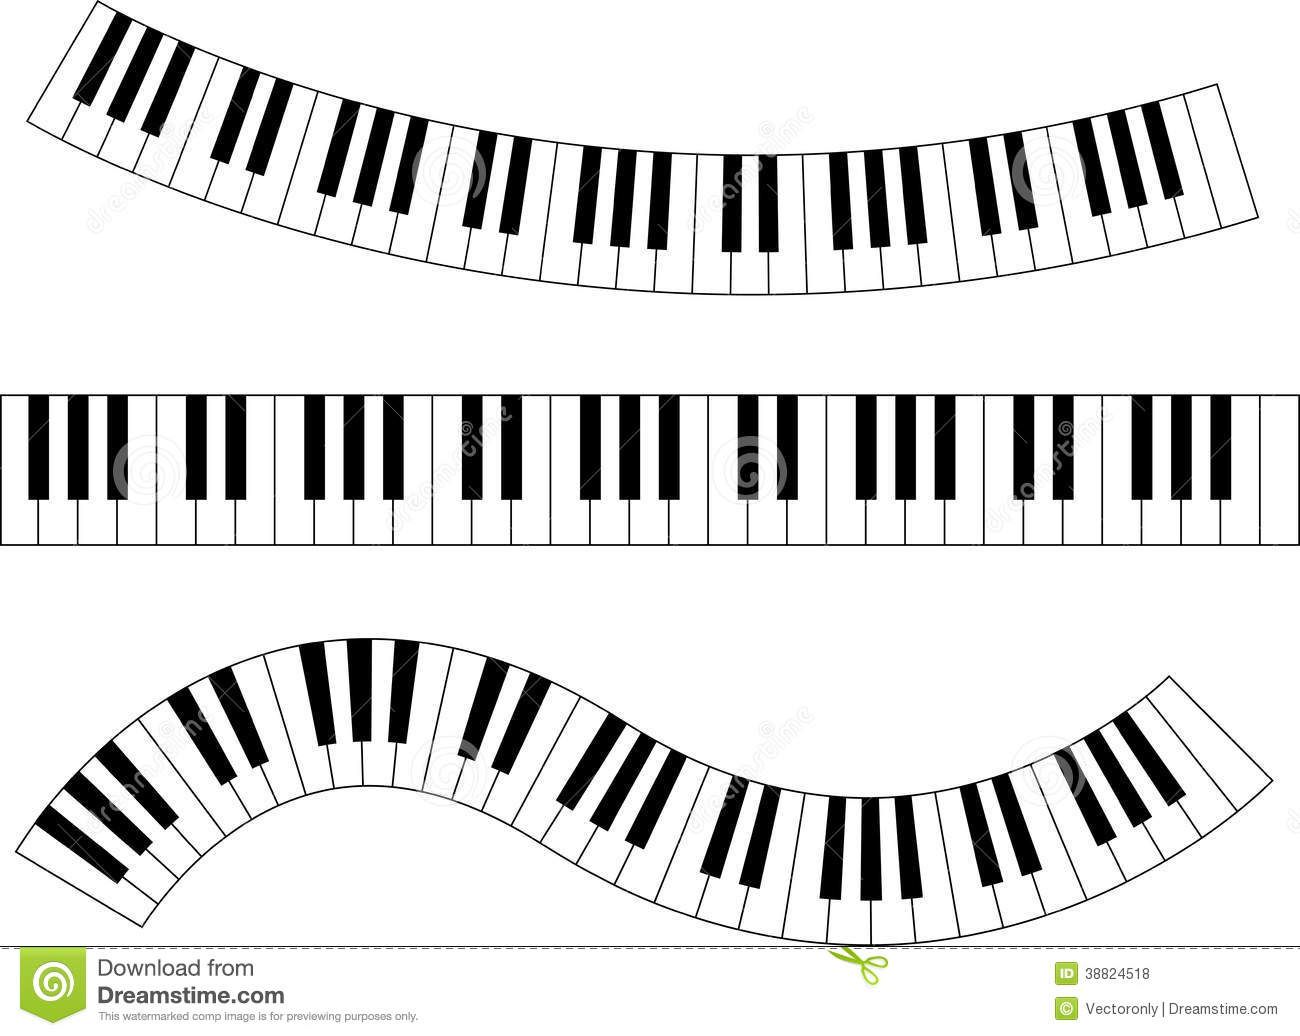 Wavy piano keyboard.